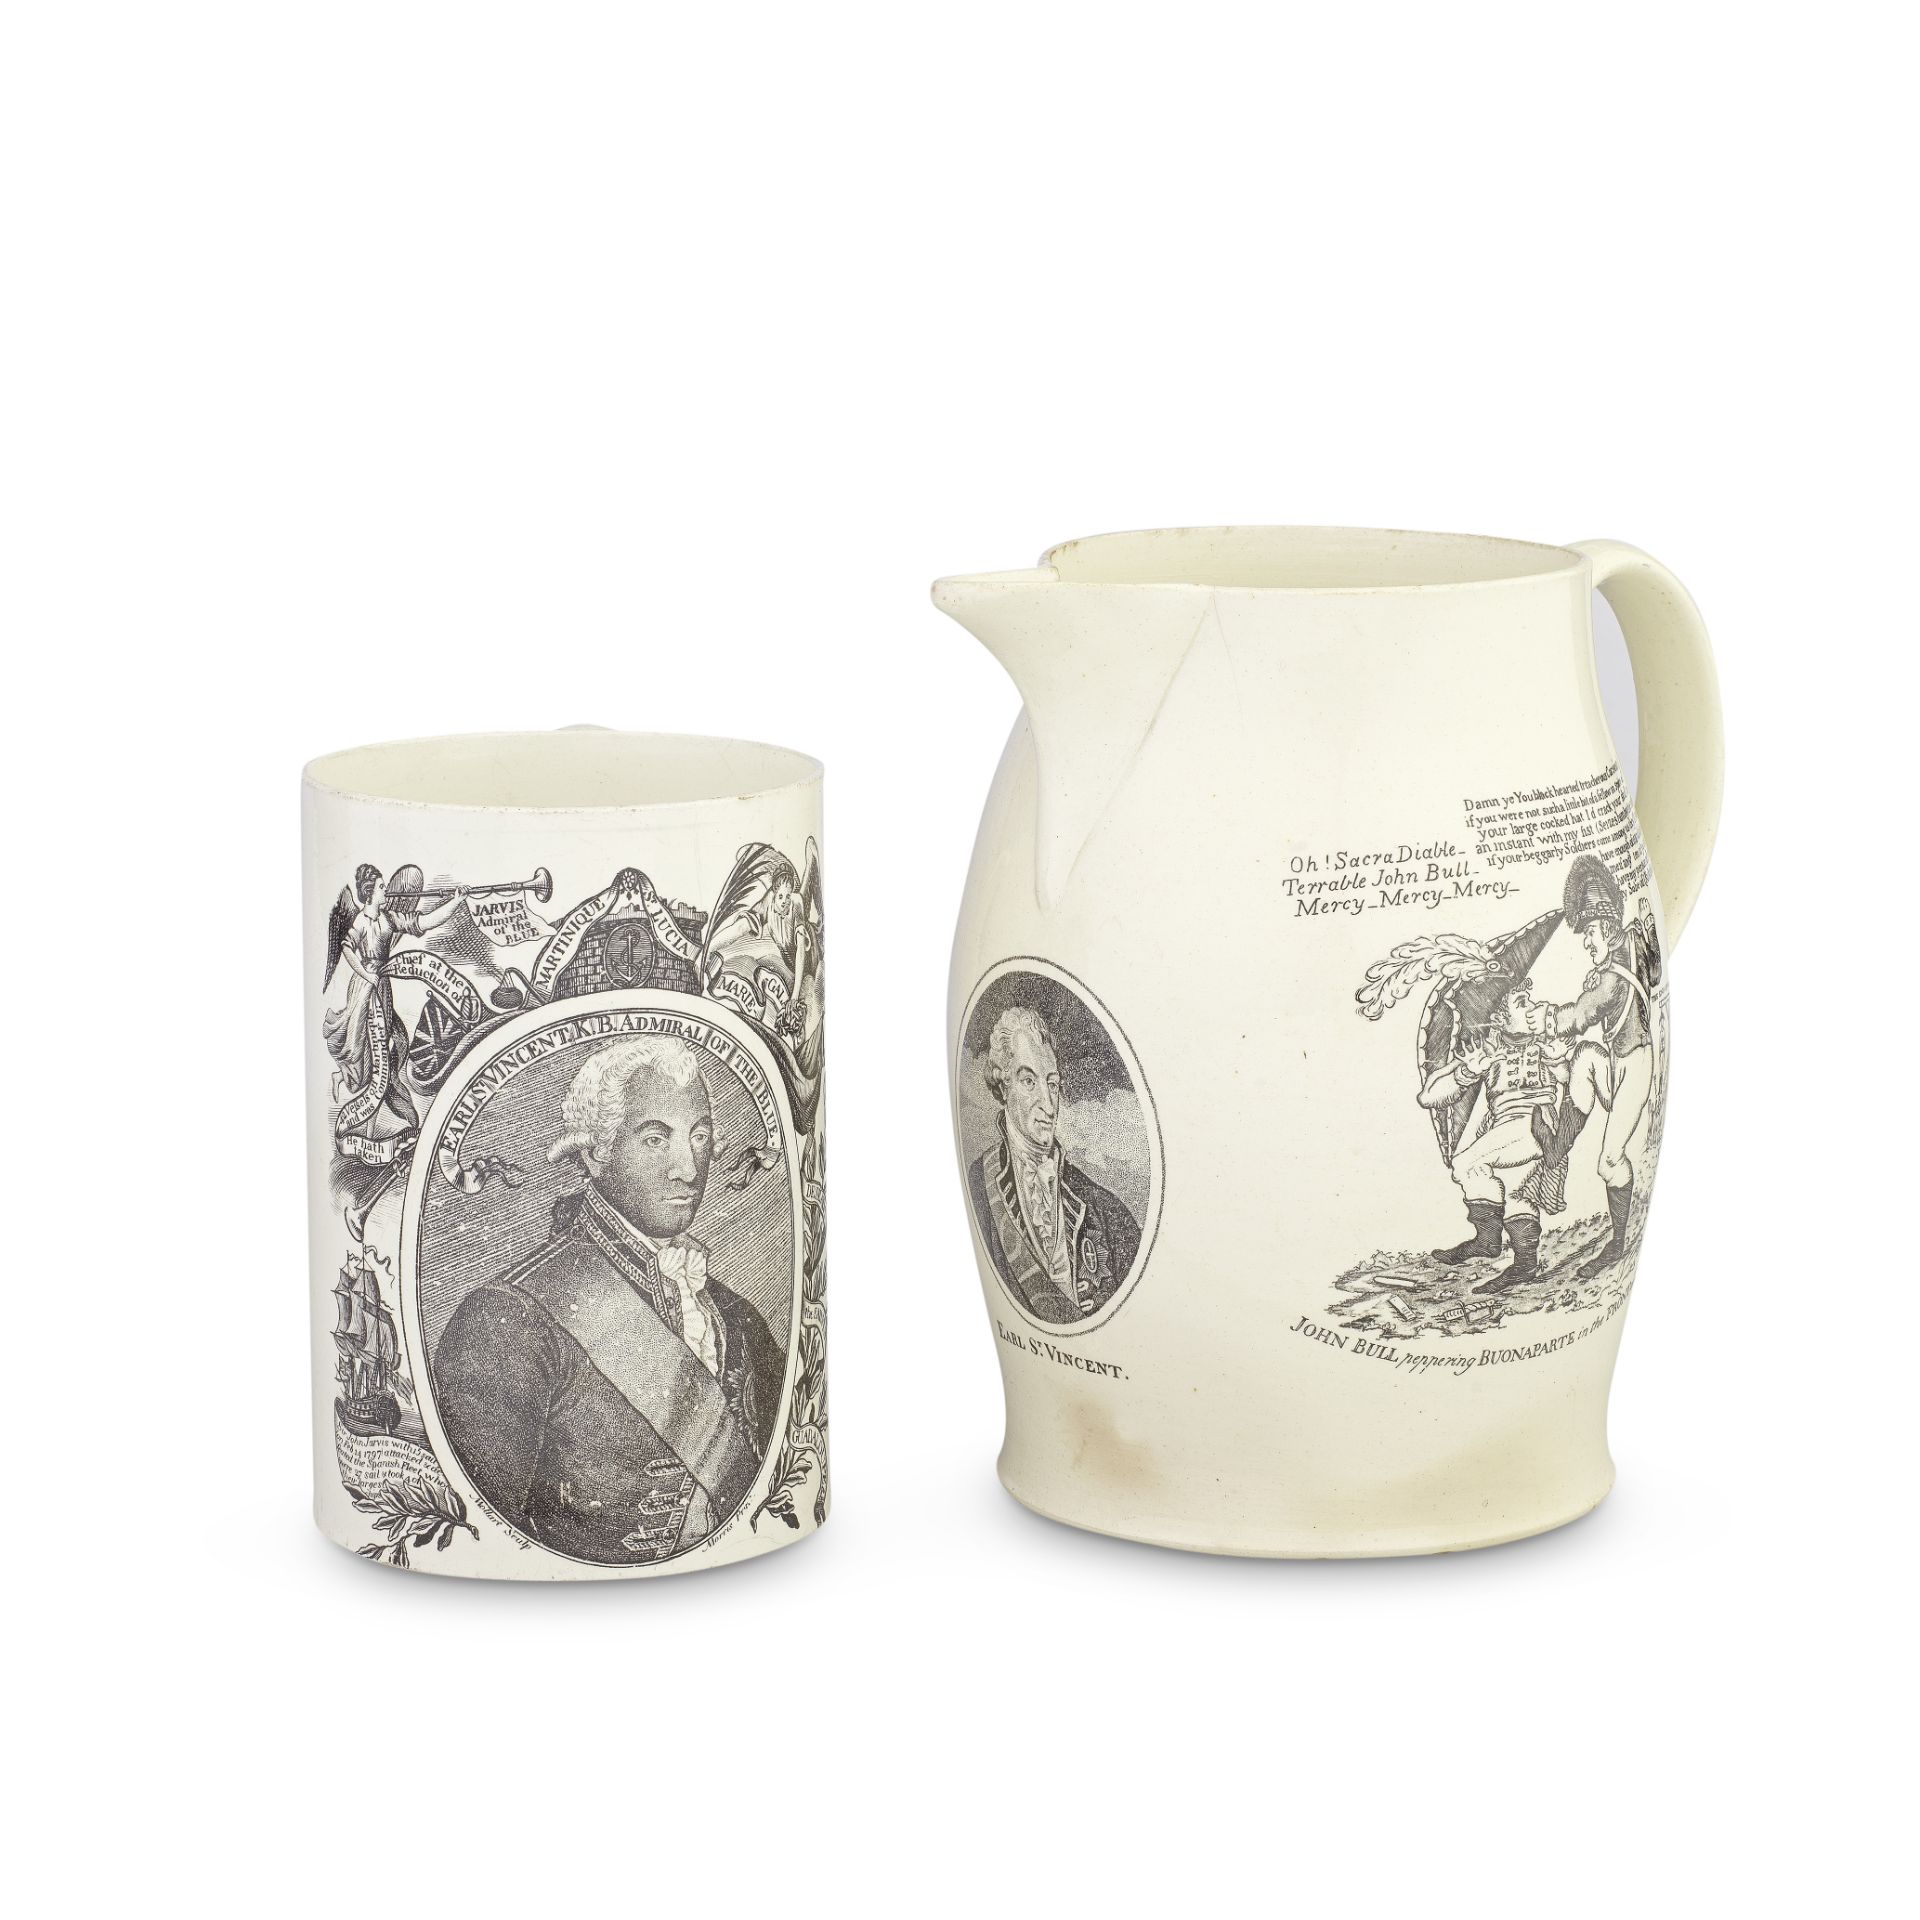 Earl St Vincent: a creamware jug and a large mug, circa 1800-10